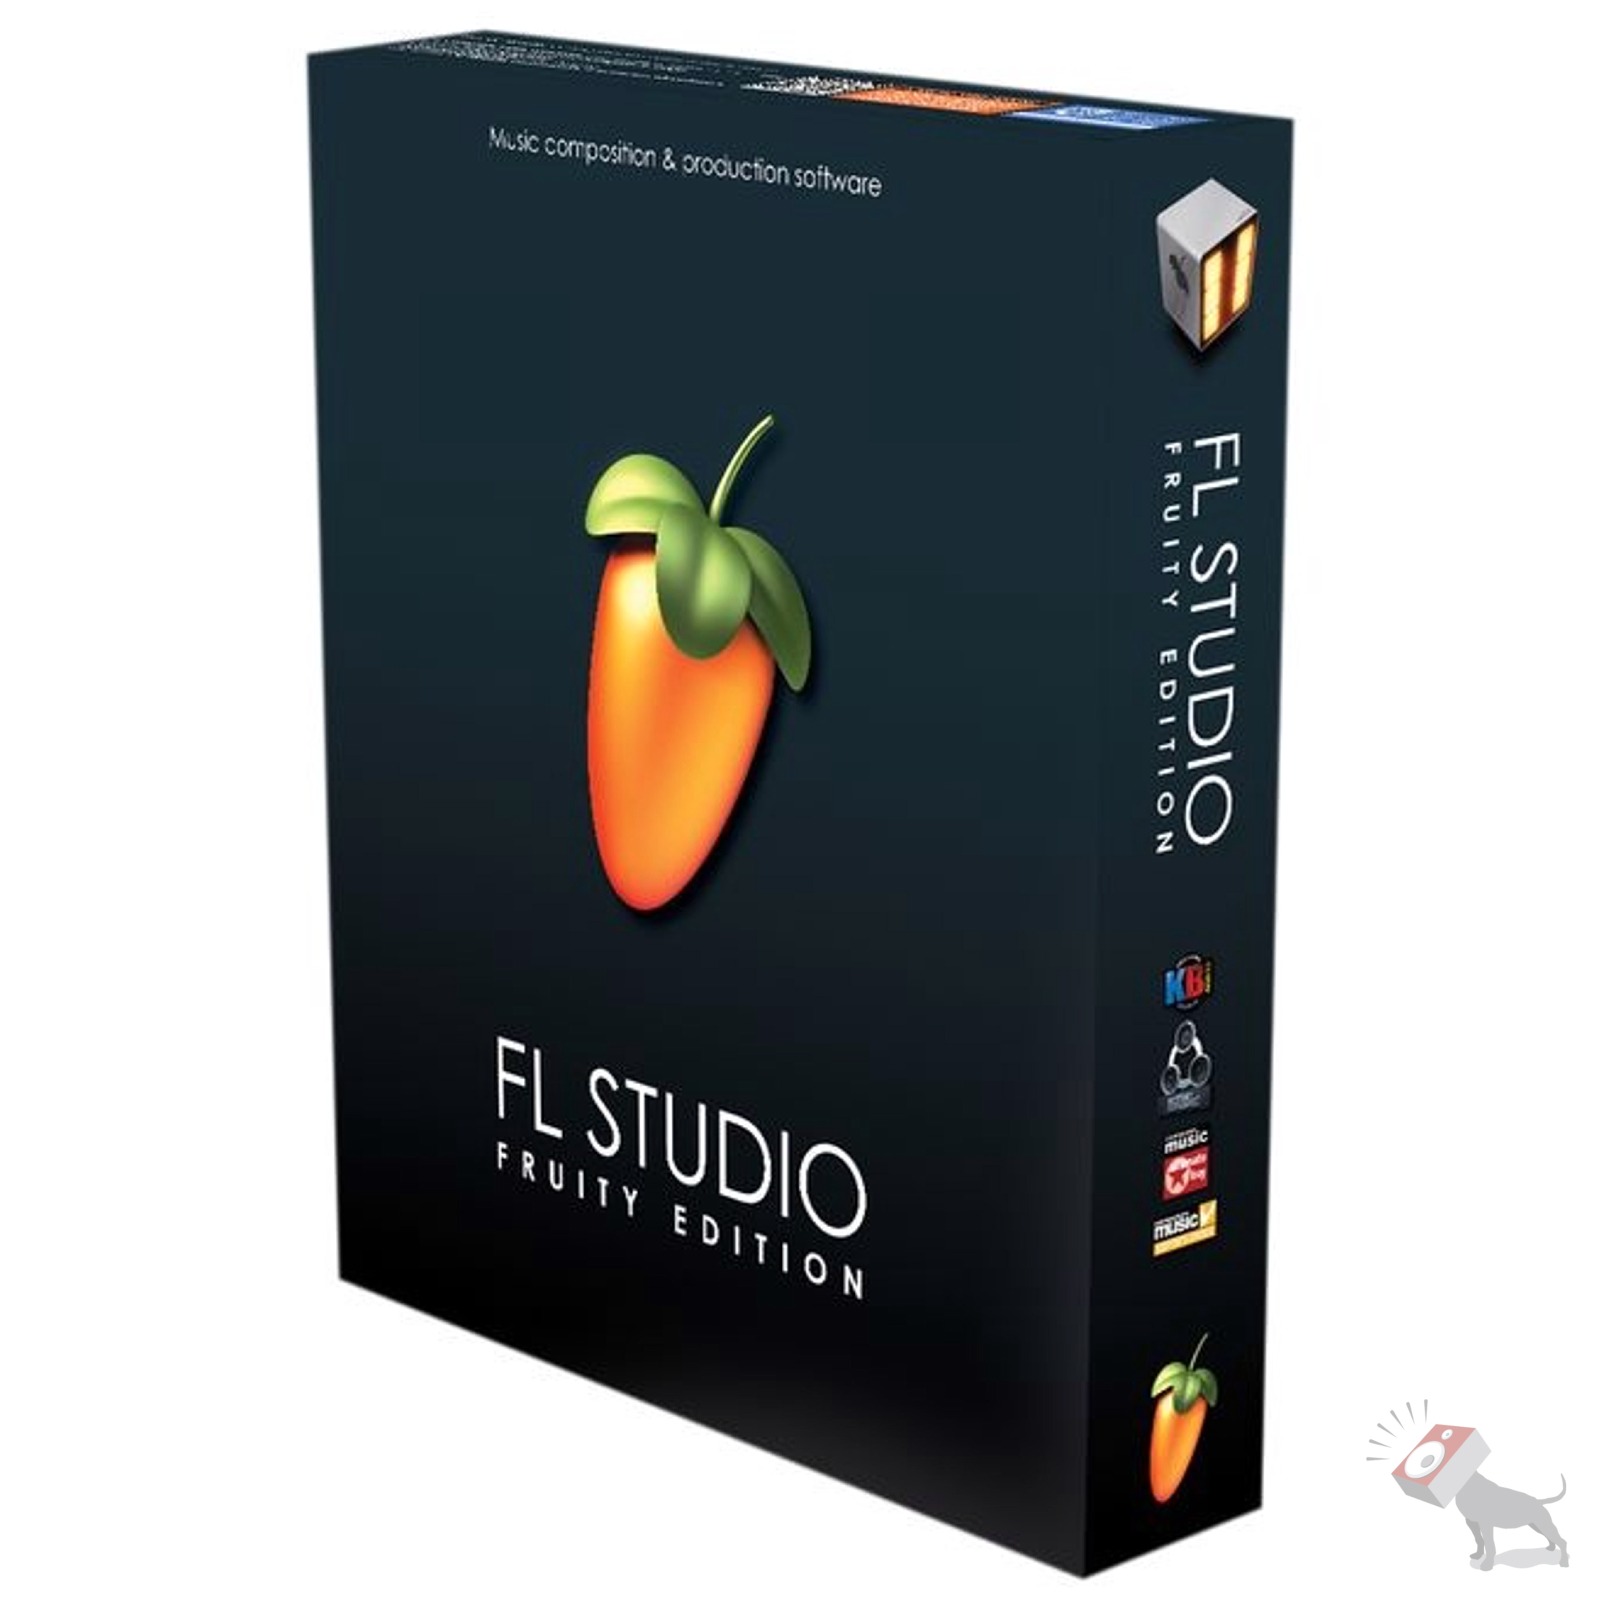 Fl Studio 12 Mac Os X Download